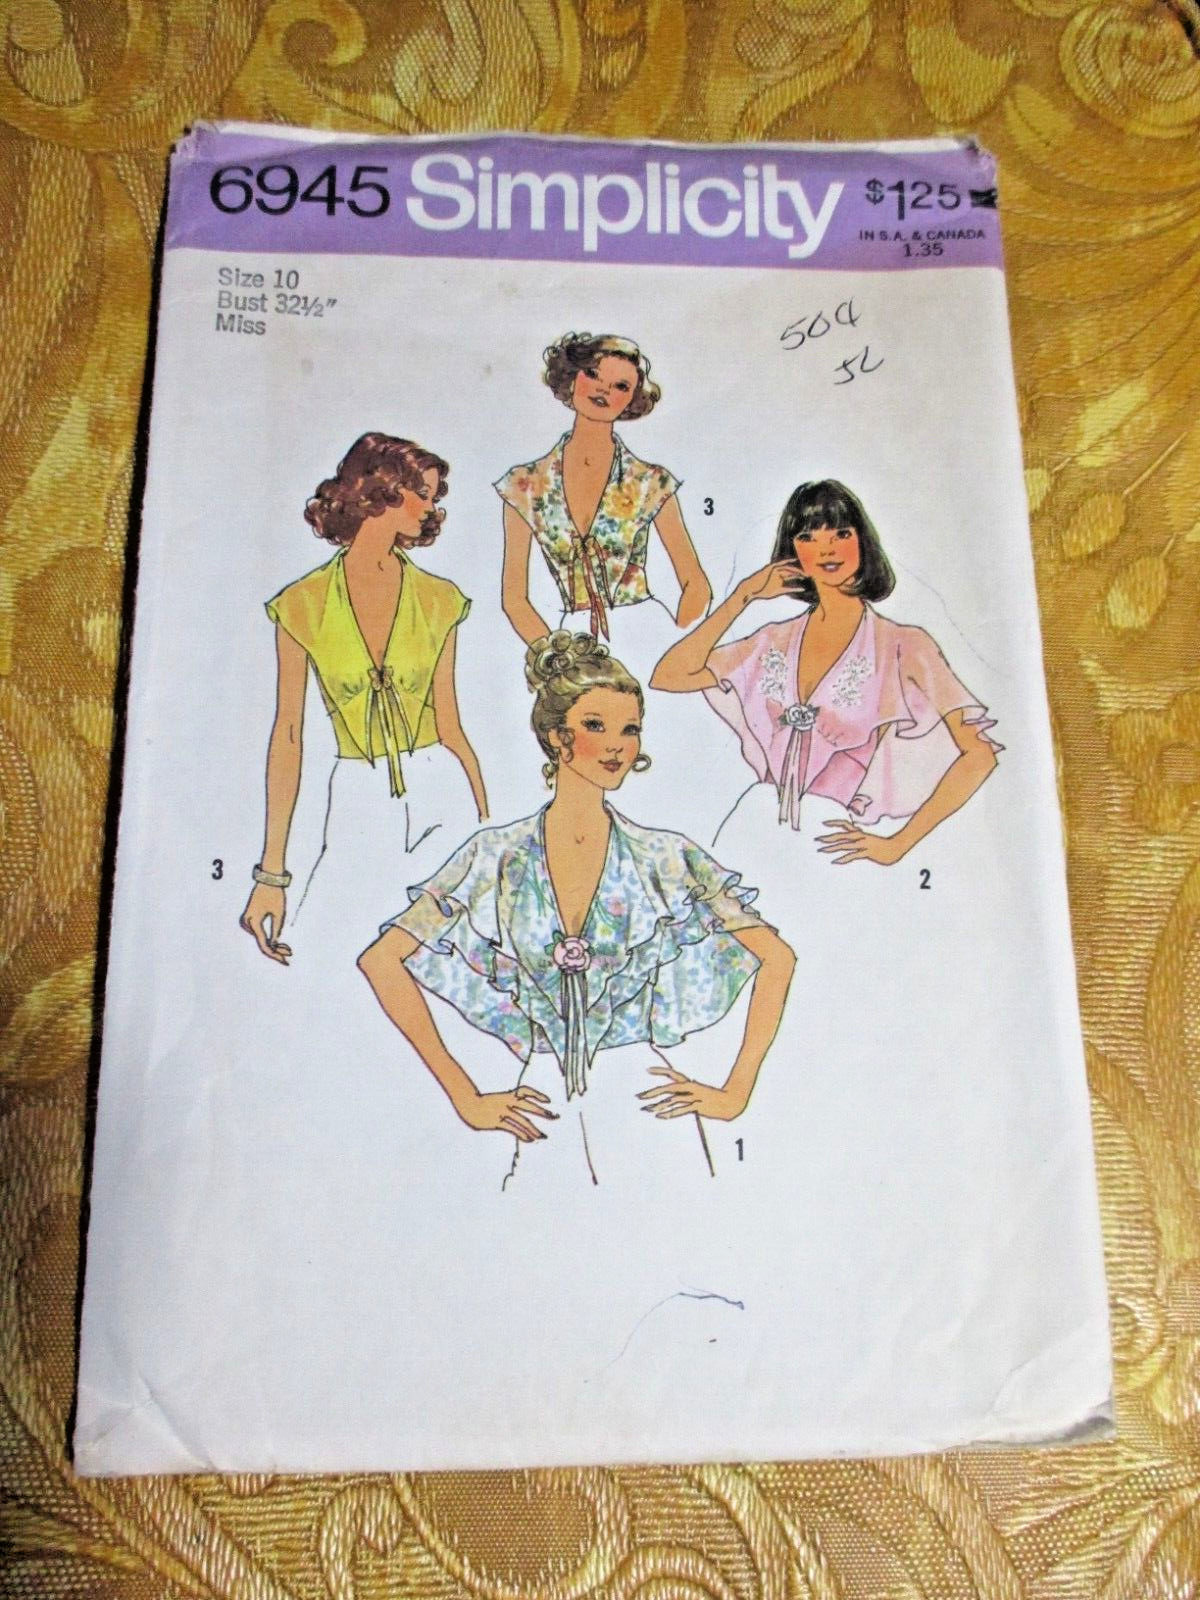 VTG 1975 Simplicity Sewing Top  Halter Bra Pattern 6945 ￼Misses Size 12 Bust 34